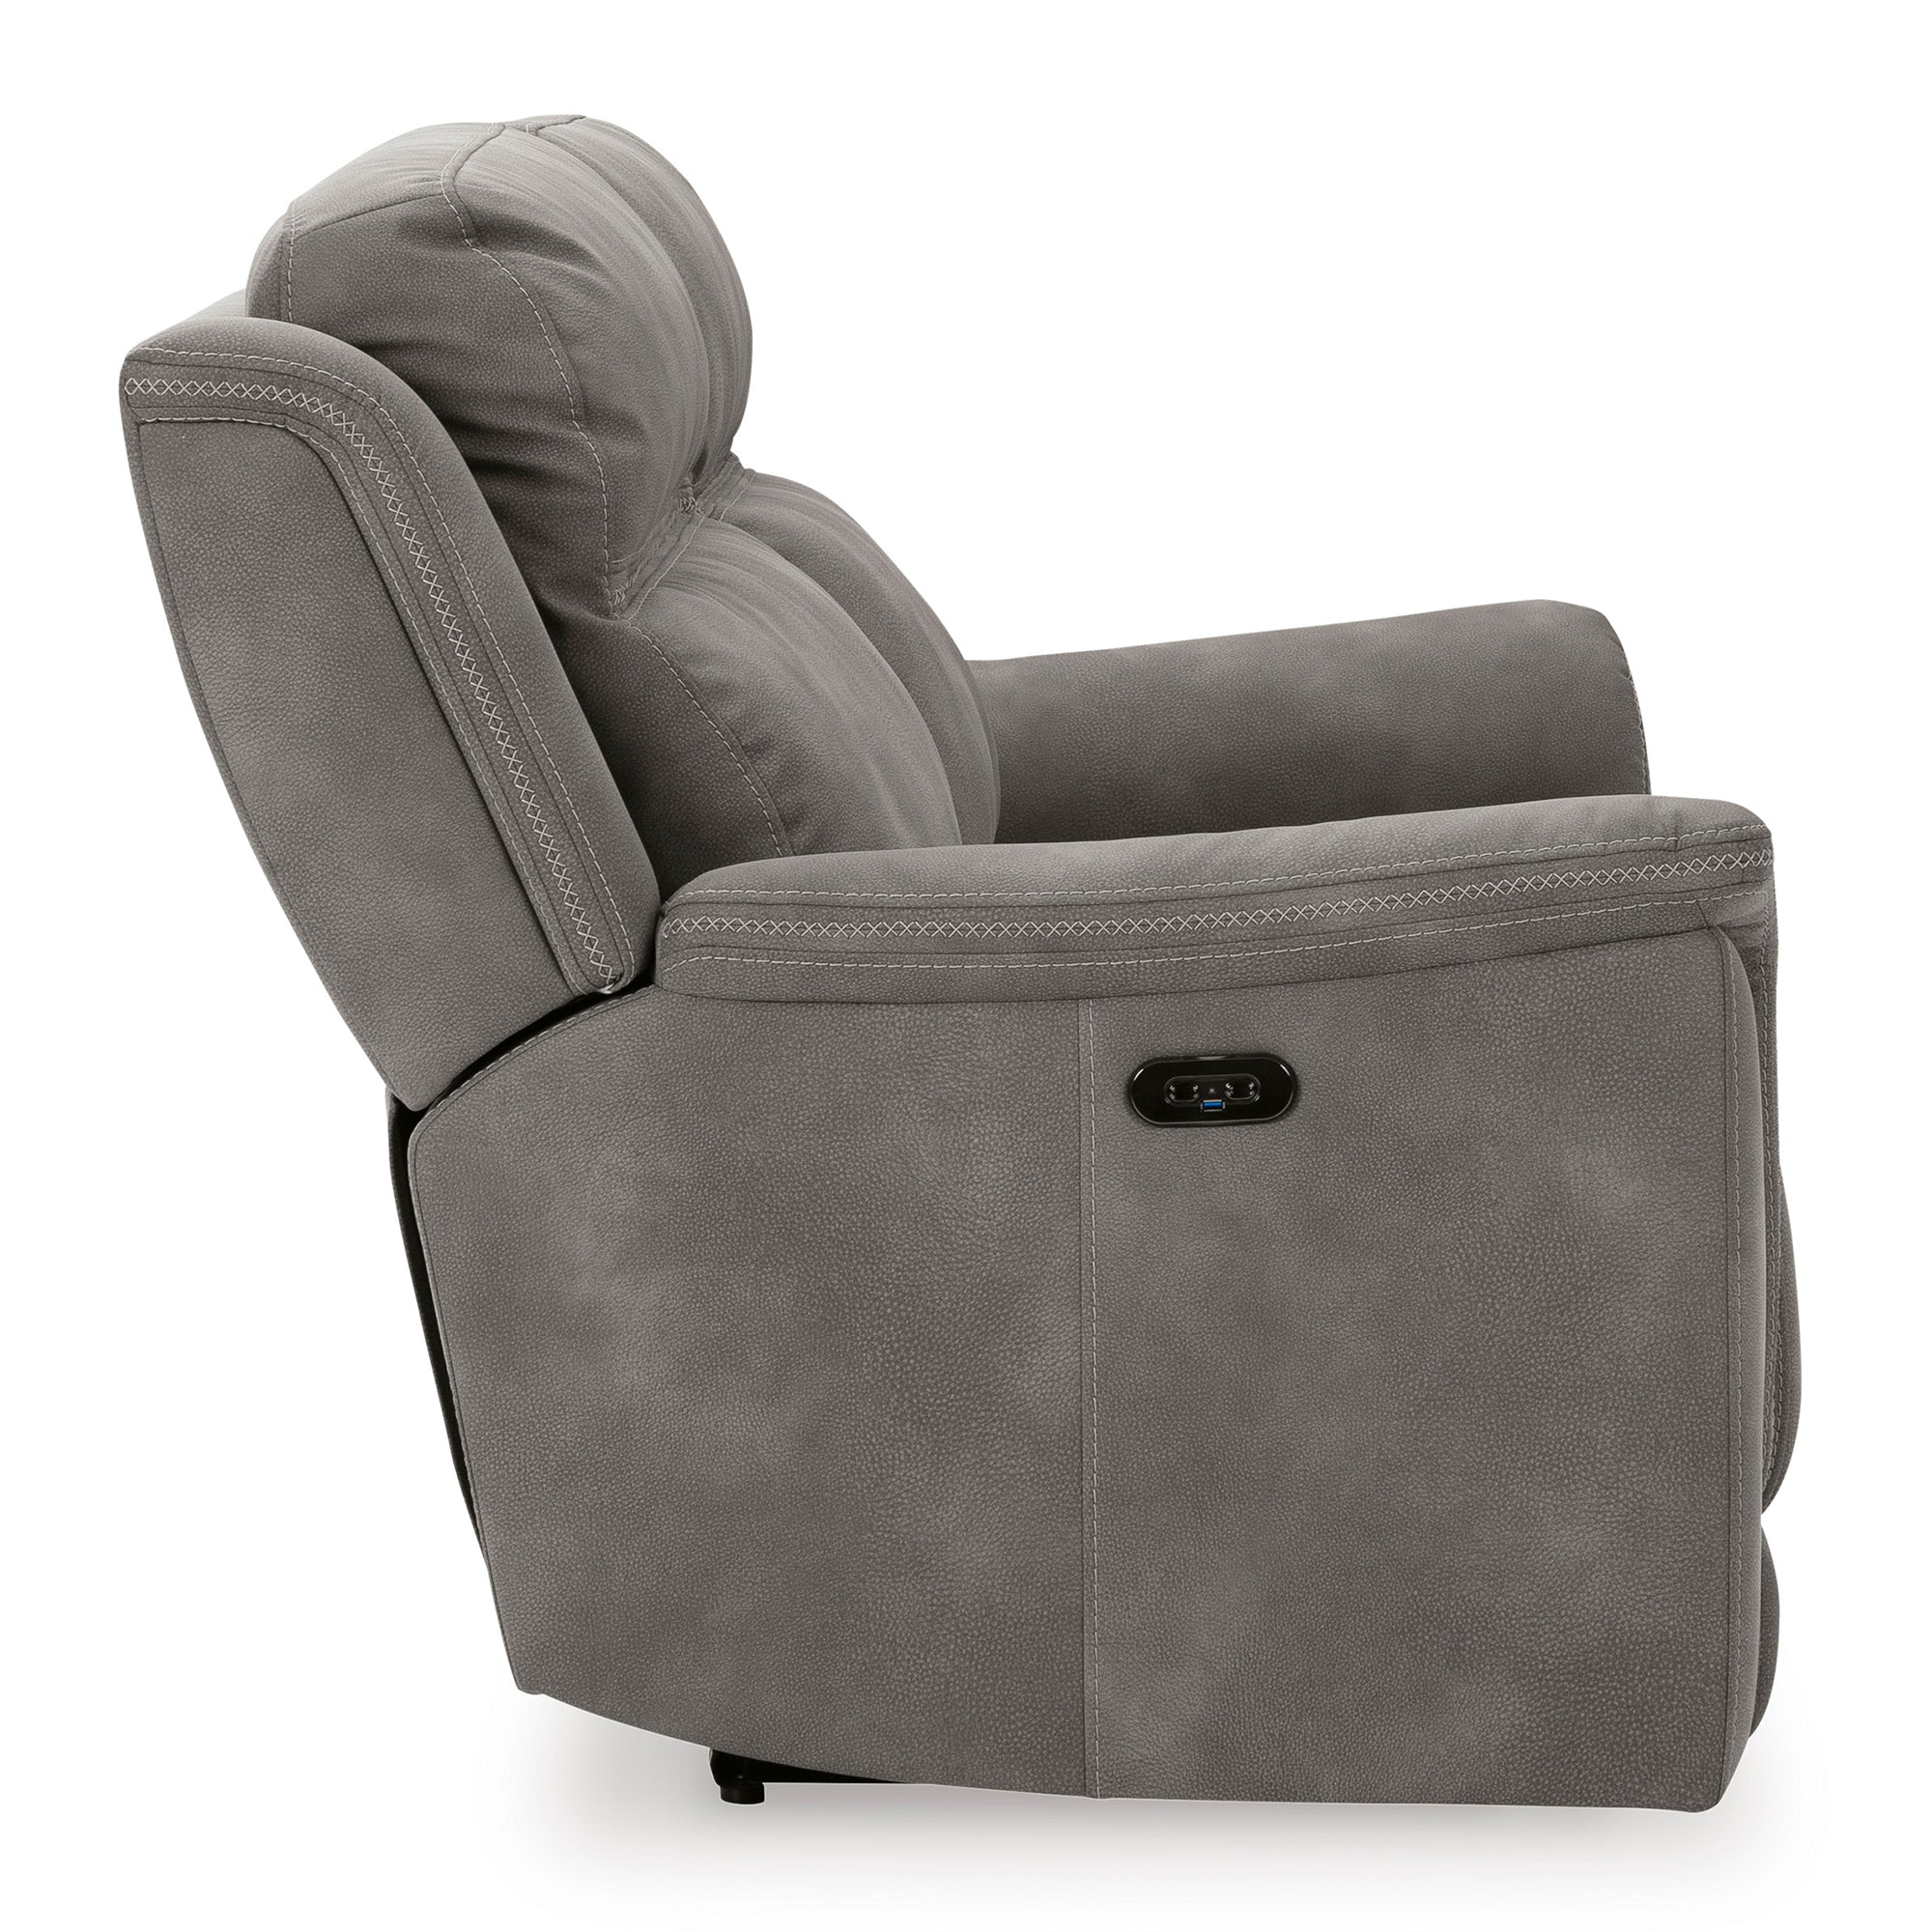 Next Gen DuraPella 2 Seat Power Recliner Sofa With Adjustable Headrest